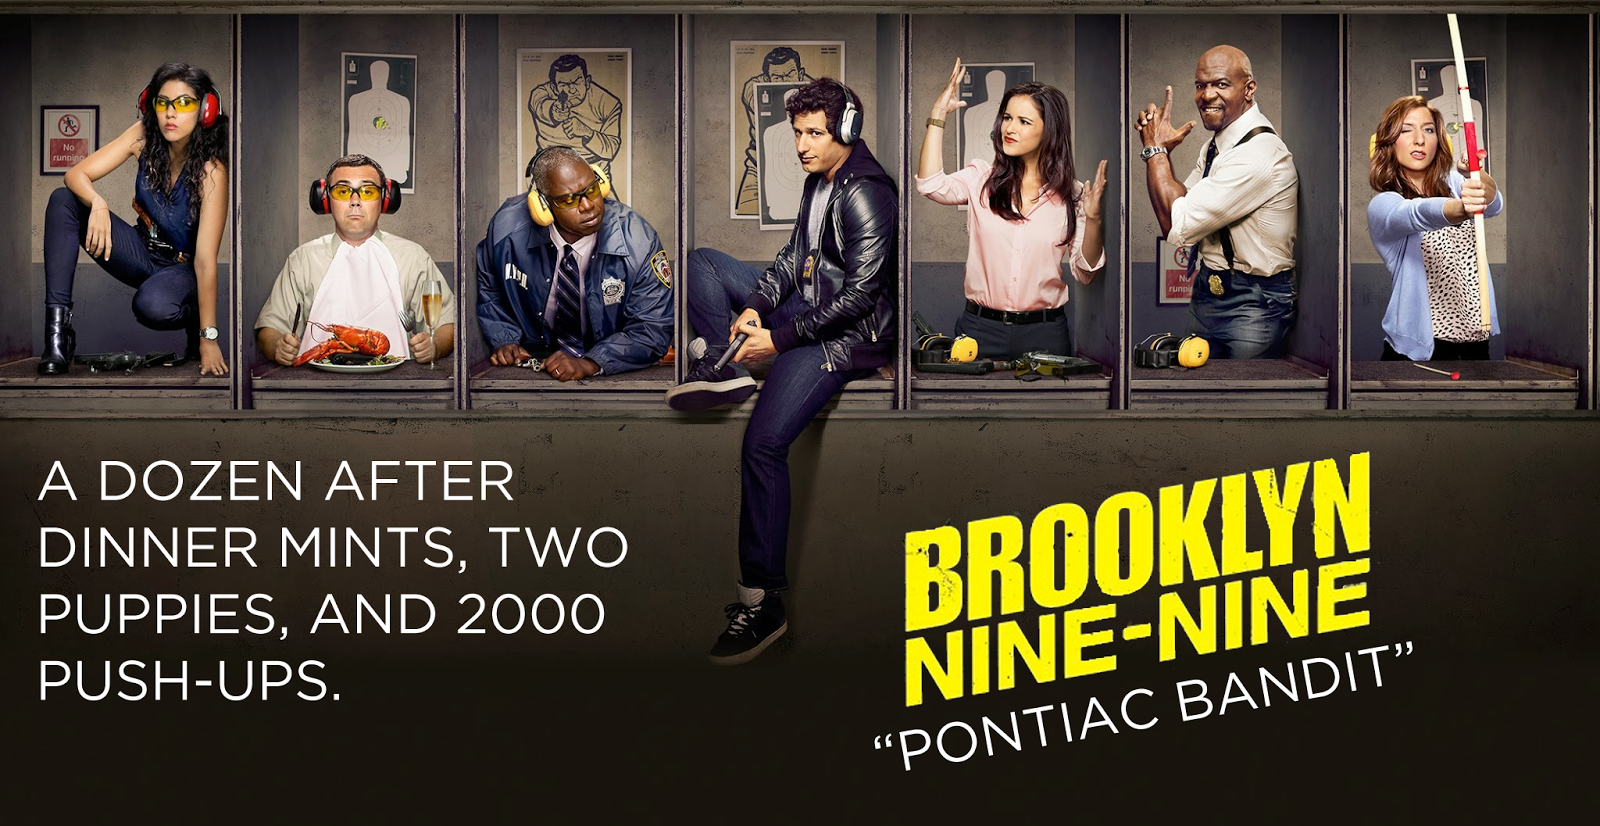 Brooklyn Nine-Nine - Episode 1.12 - Pontiac Bandit - Review